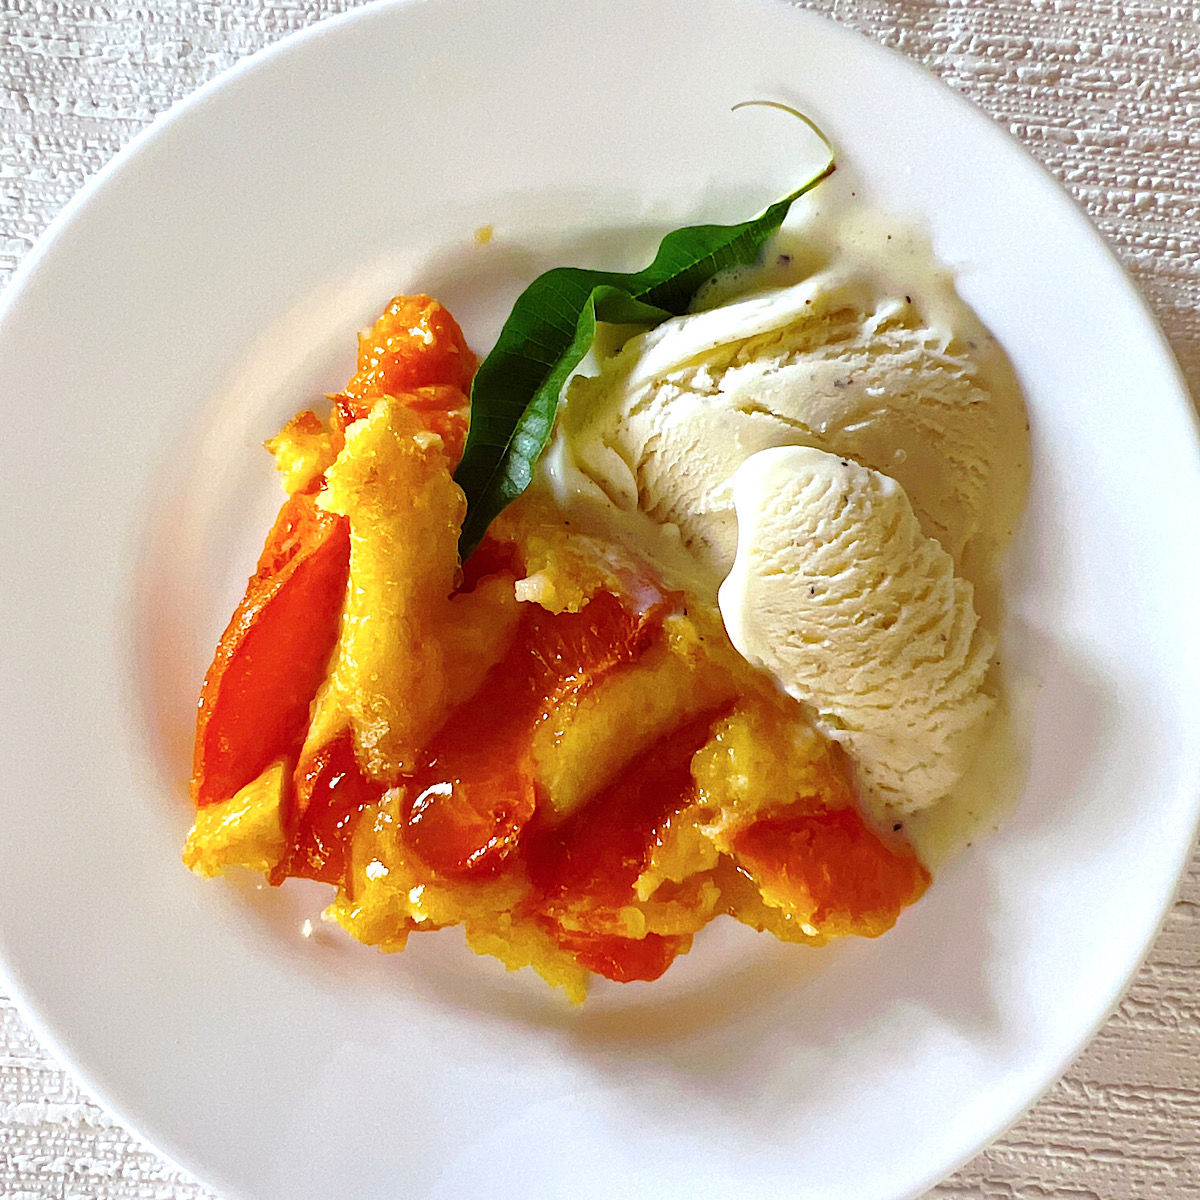 Dish of crustless apricot frangipane with scoop of ice cream and lemon verbena leaf.